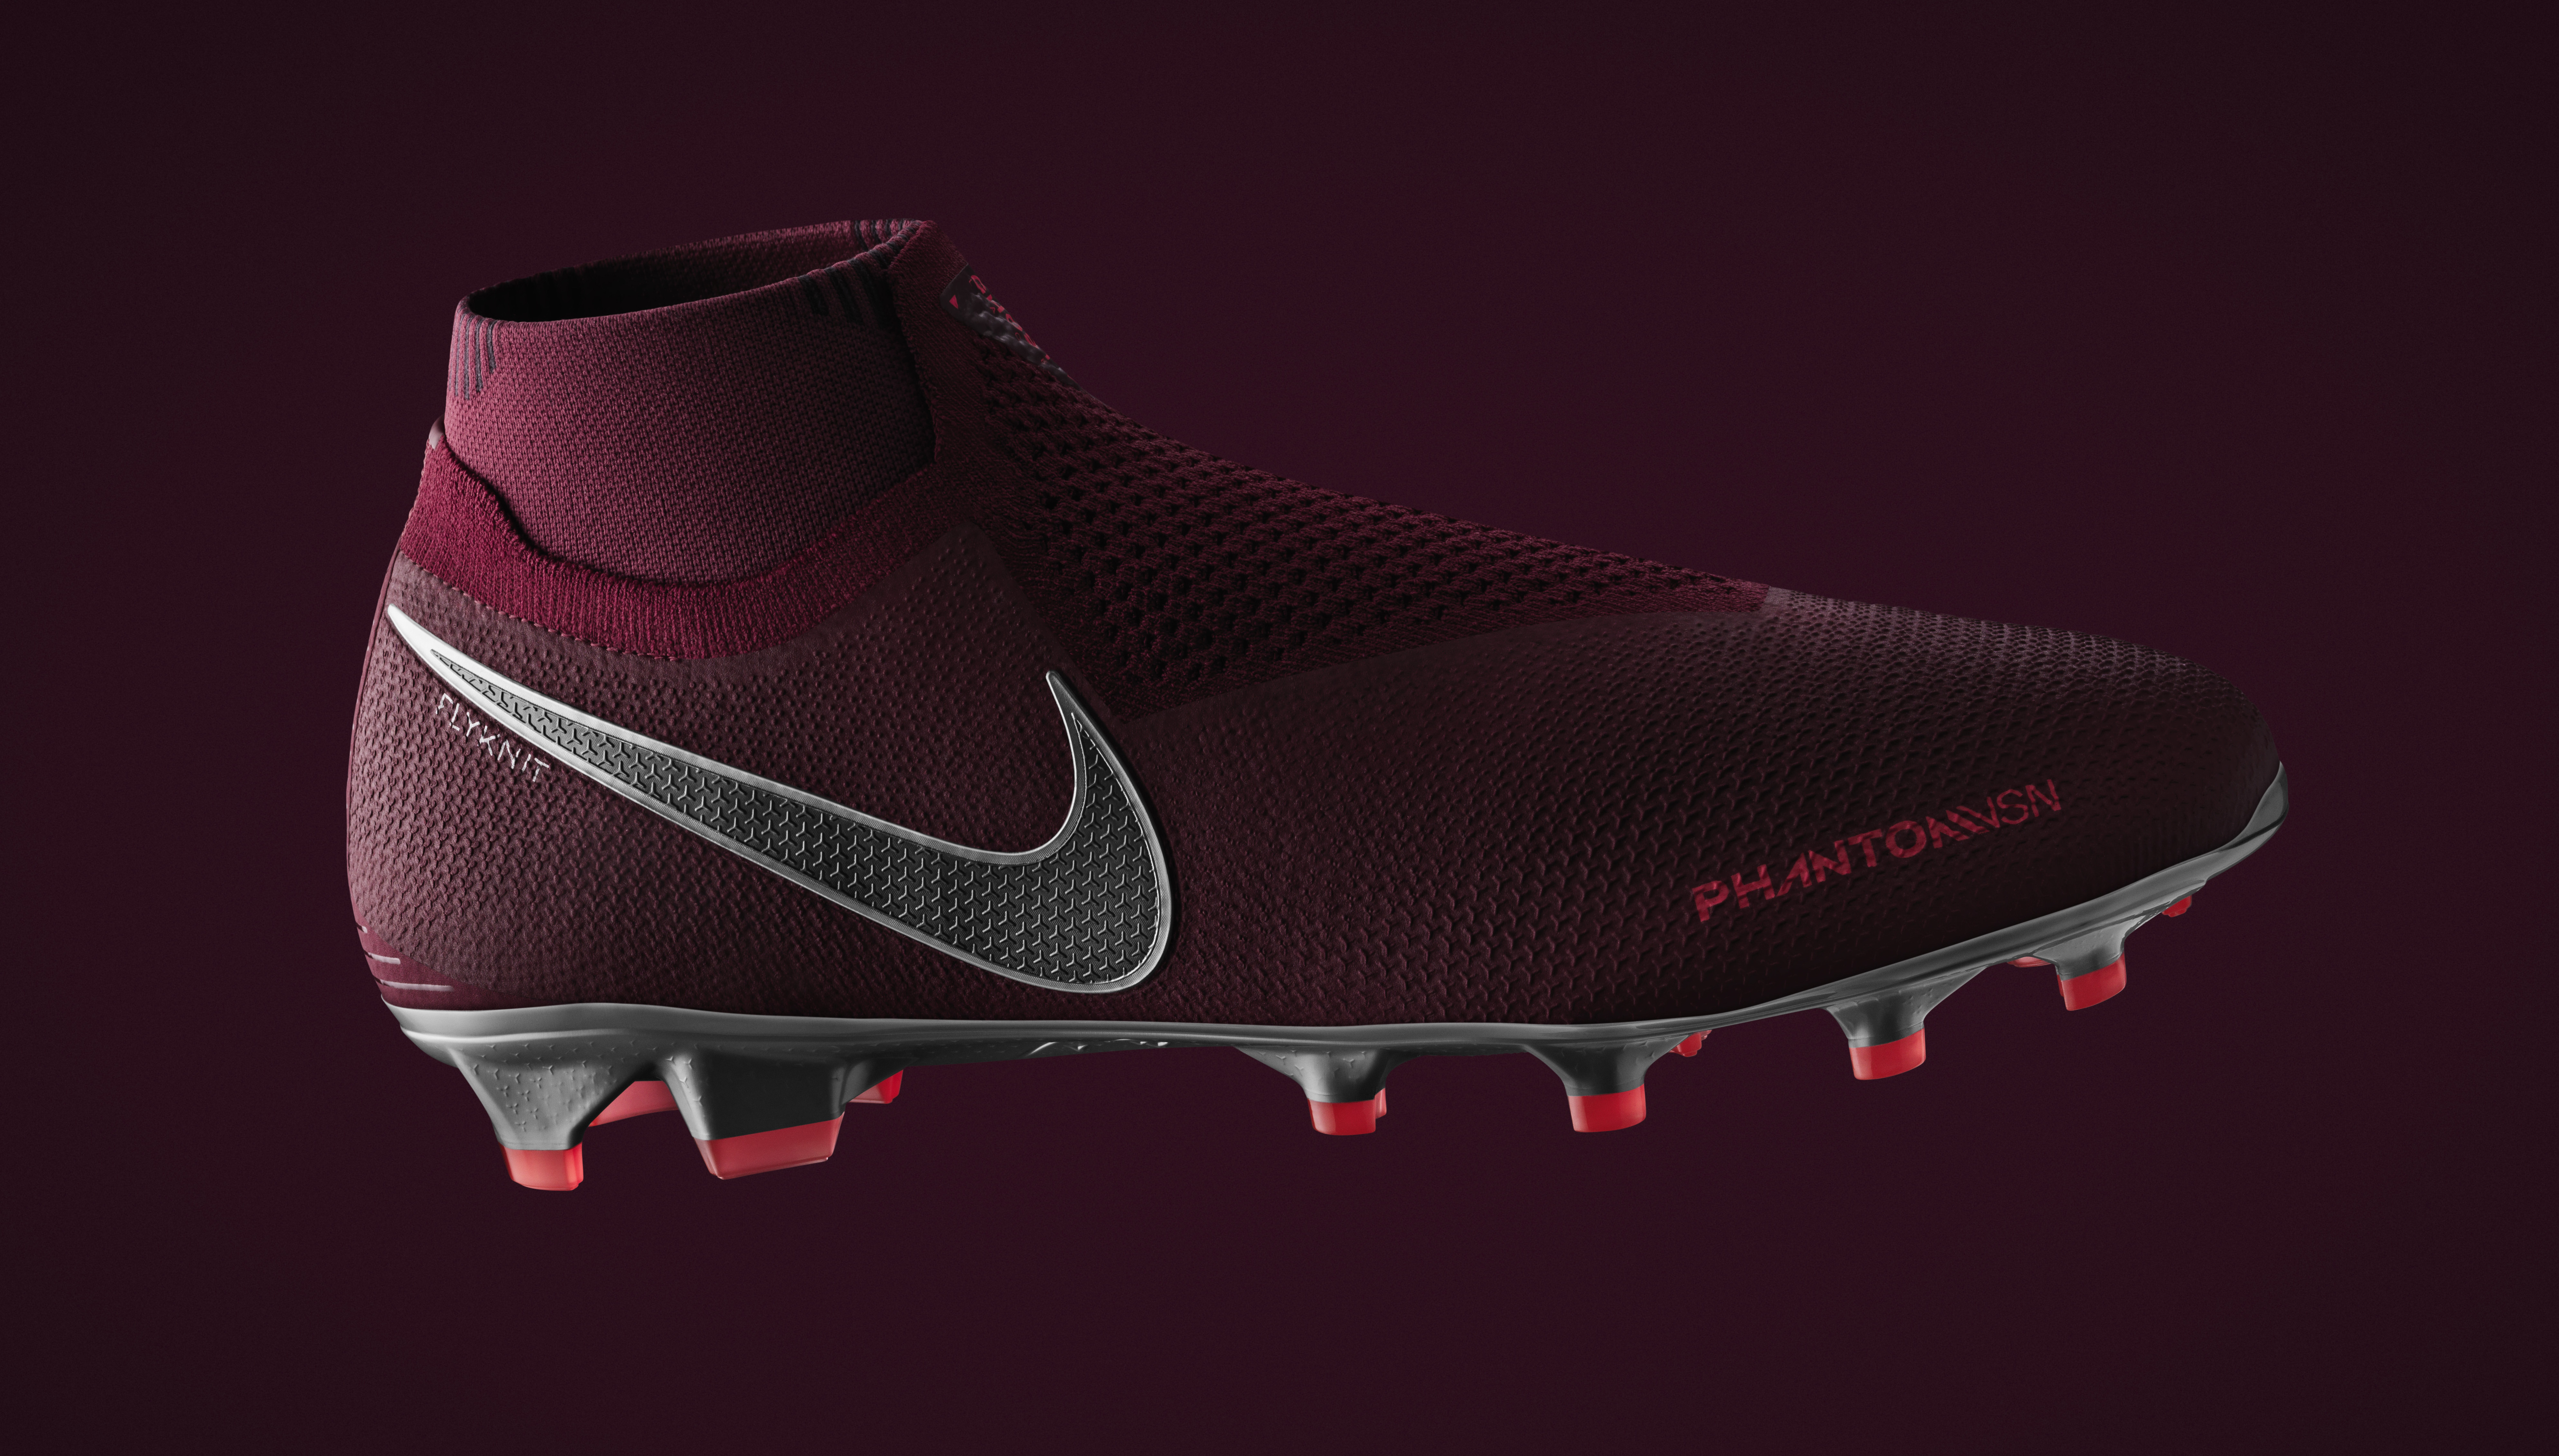 Nike PhantomVSN Soccer Release Date | Sole Collector